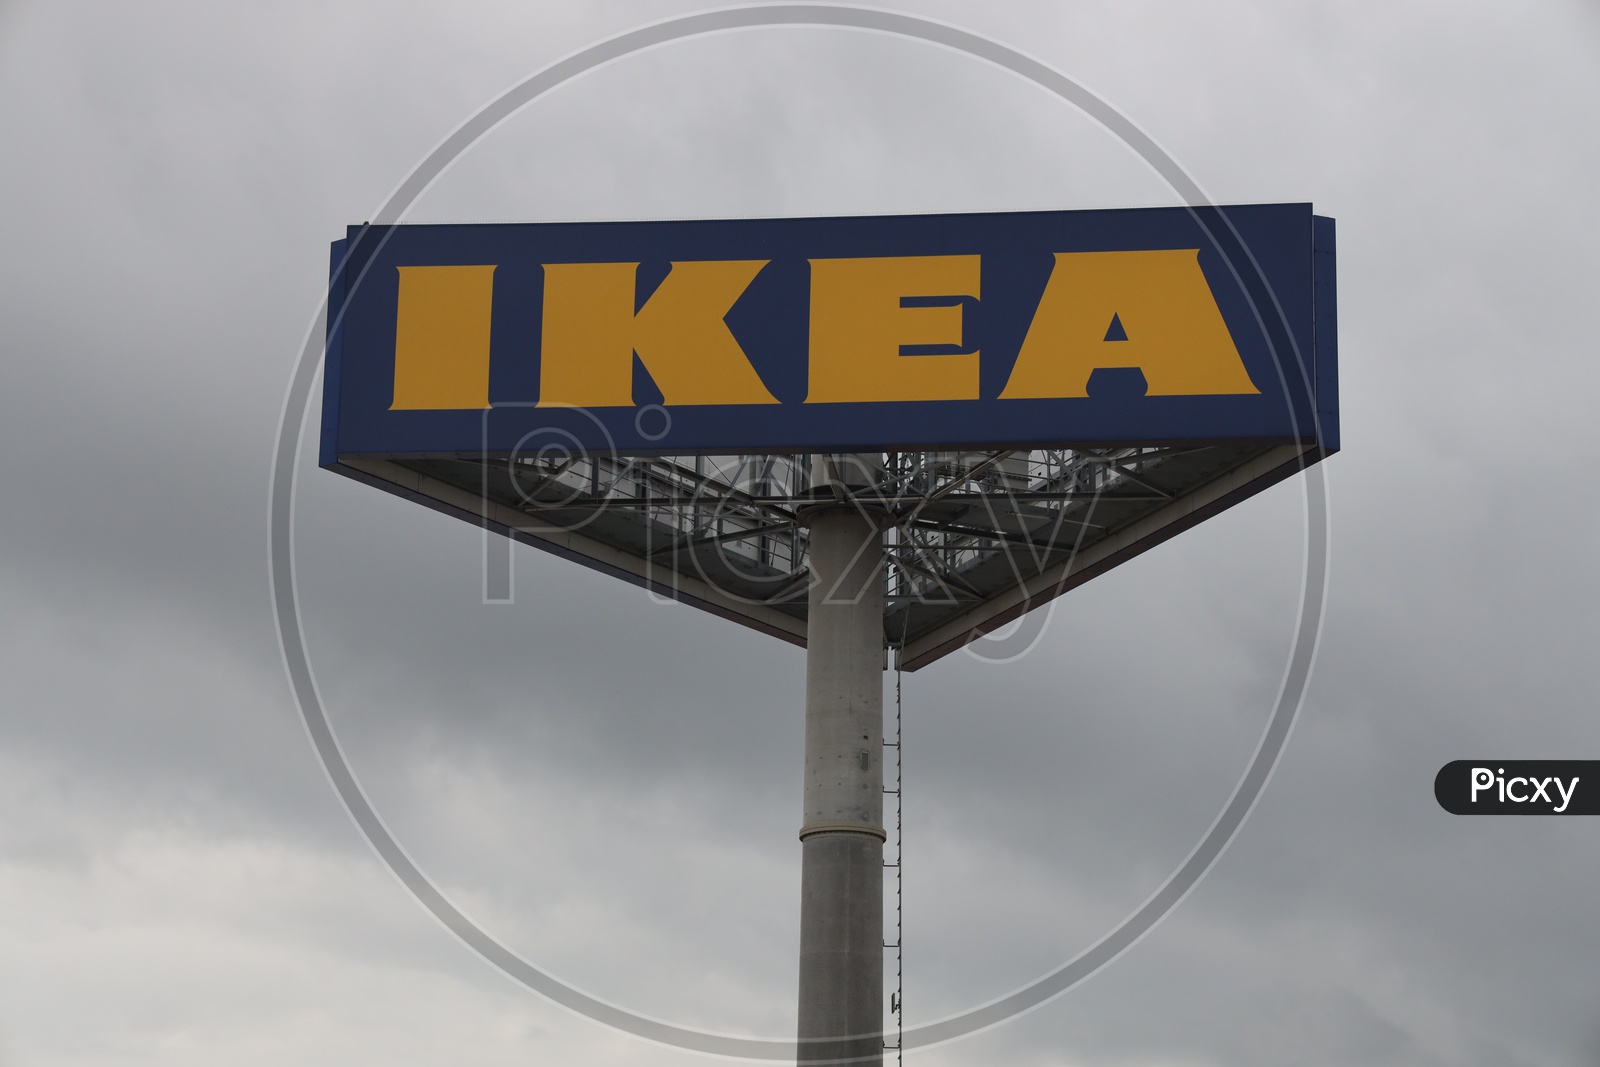 IKEA Unipole or Monopole  With IKEA Hoarding